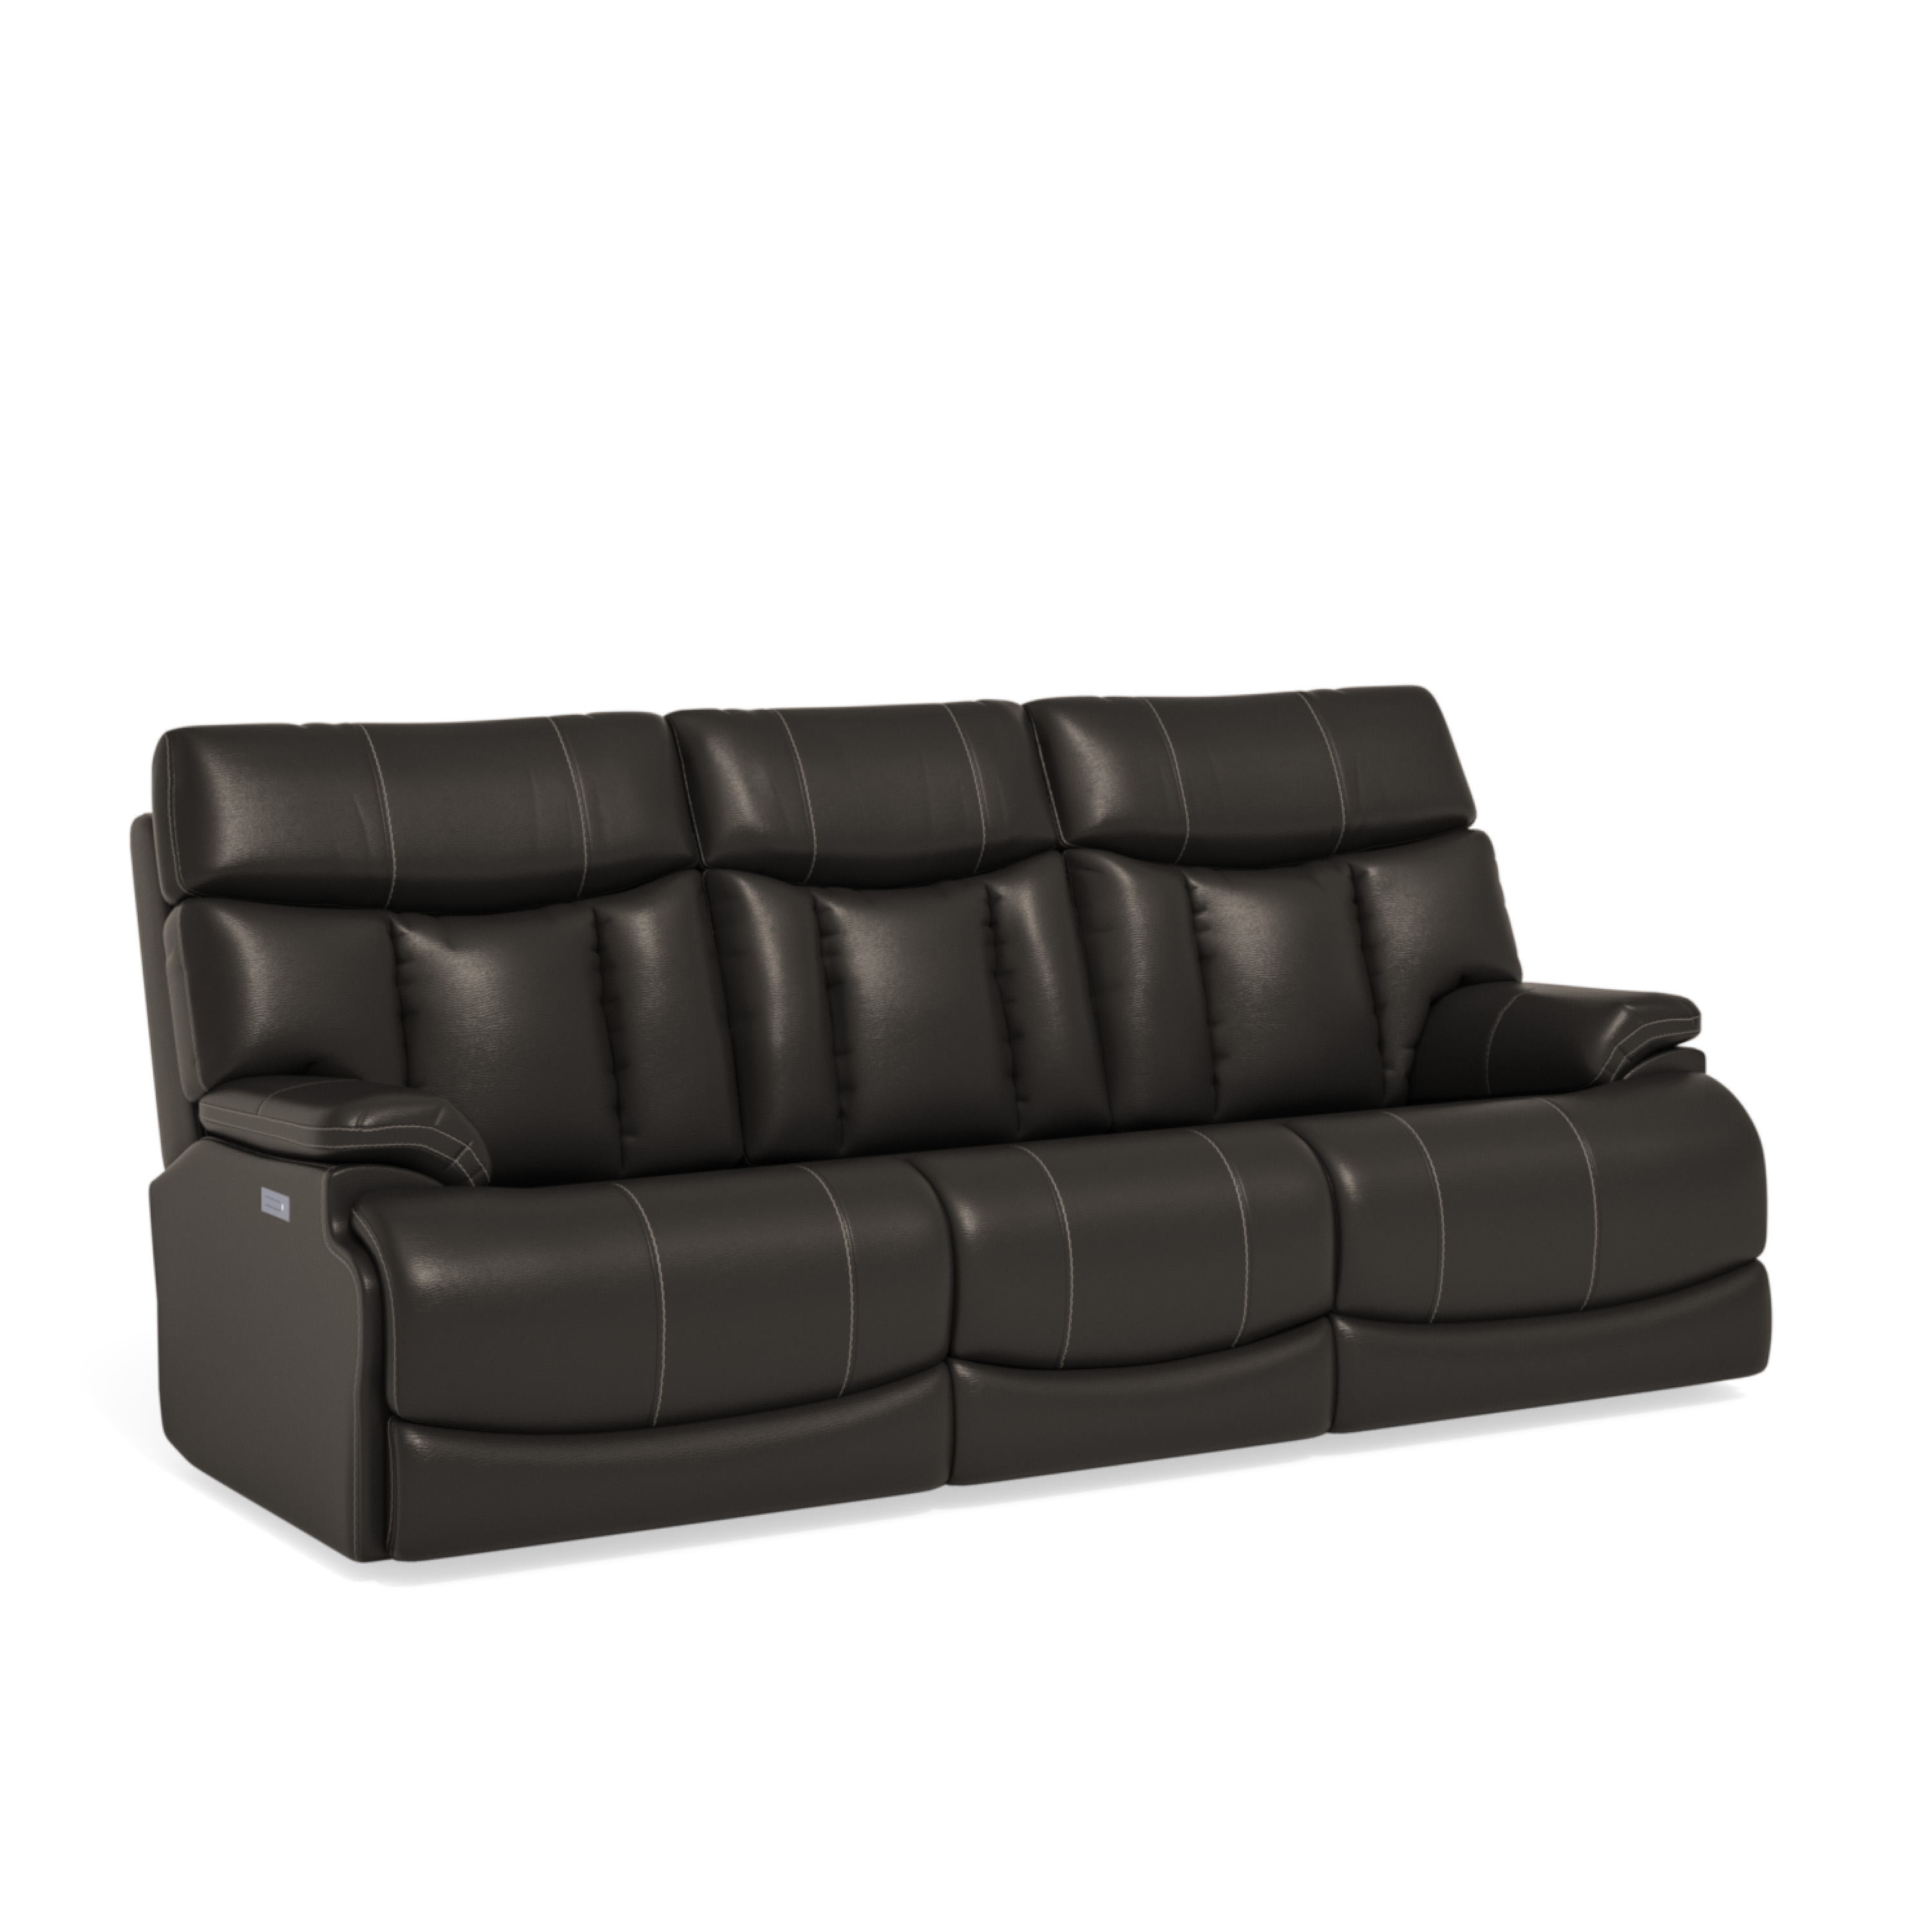 Flexsteel black leather reclining sofa